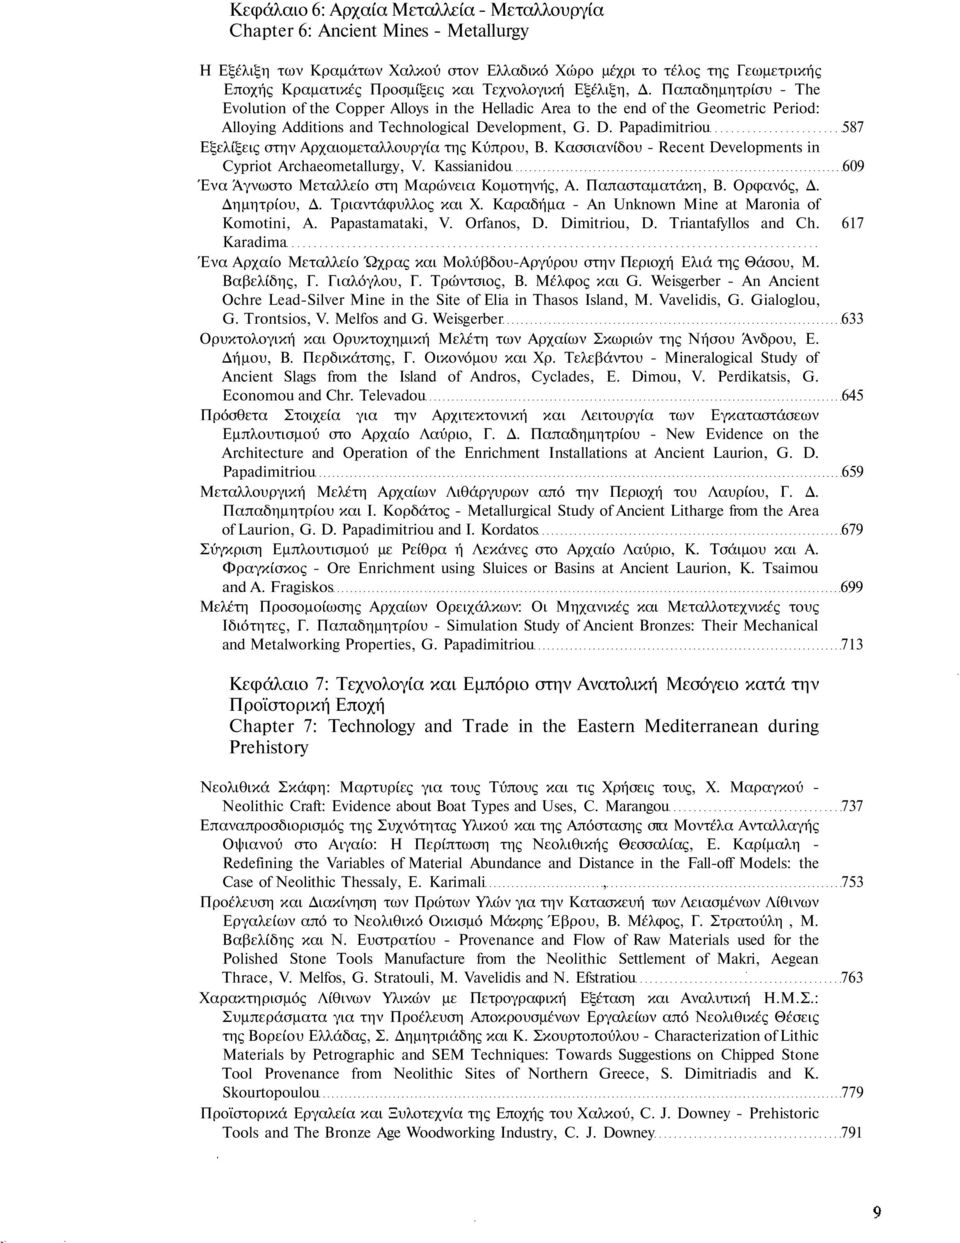 velopment, G. D. Papadimitriou 587 Εξελίξεις στην Αρχαιομεταλλουργία της Κύπρου, Β. Κασσιανίδου - Recent Developments in Cypriot Archaeometallurgy, V.